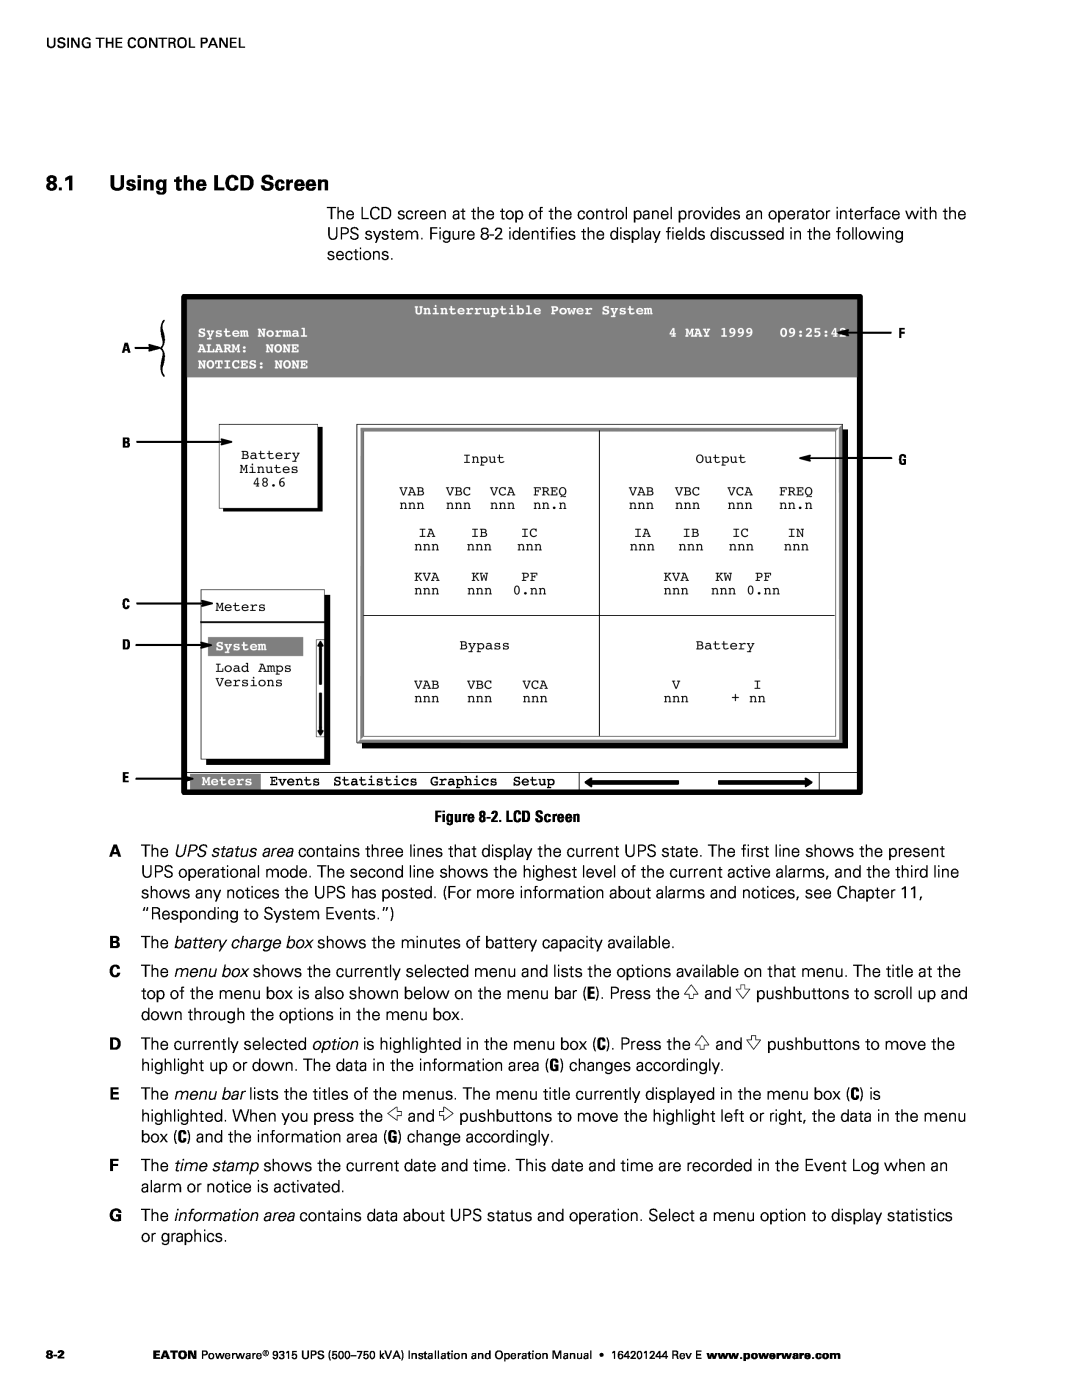 Powerware Powerware 9315 operation manual Using the LCD Screen, ‐2. LCD Screen 